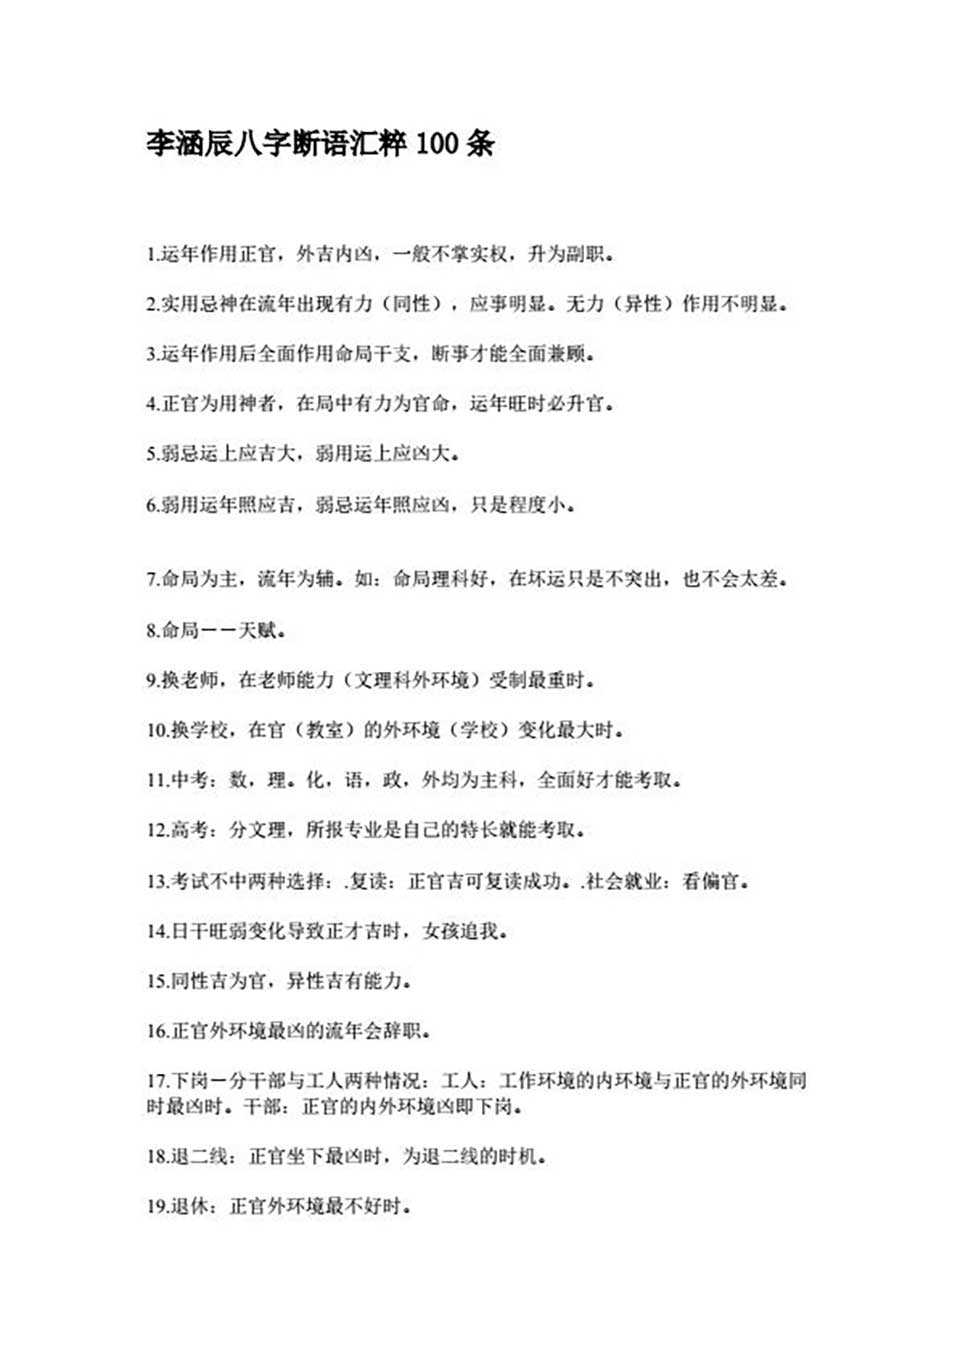 Li Hanchen-Bazi Breakdown Essence 100 Articles 5 pages.pdf